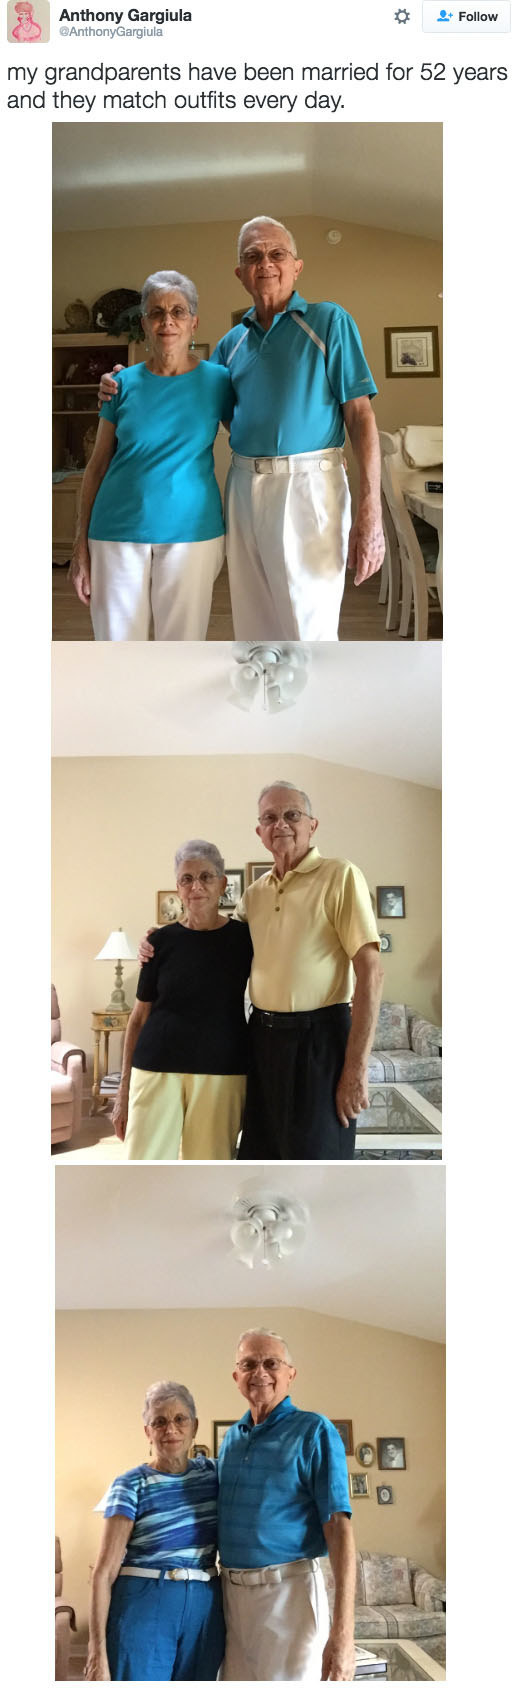 Grandparents were still in love: